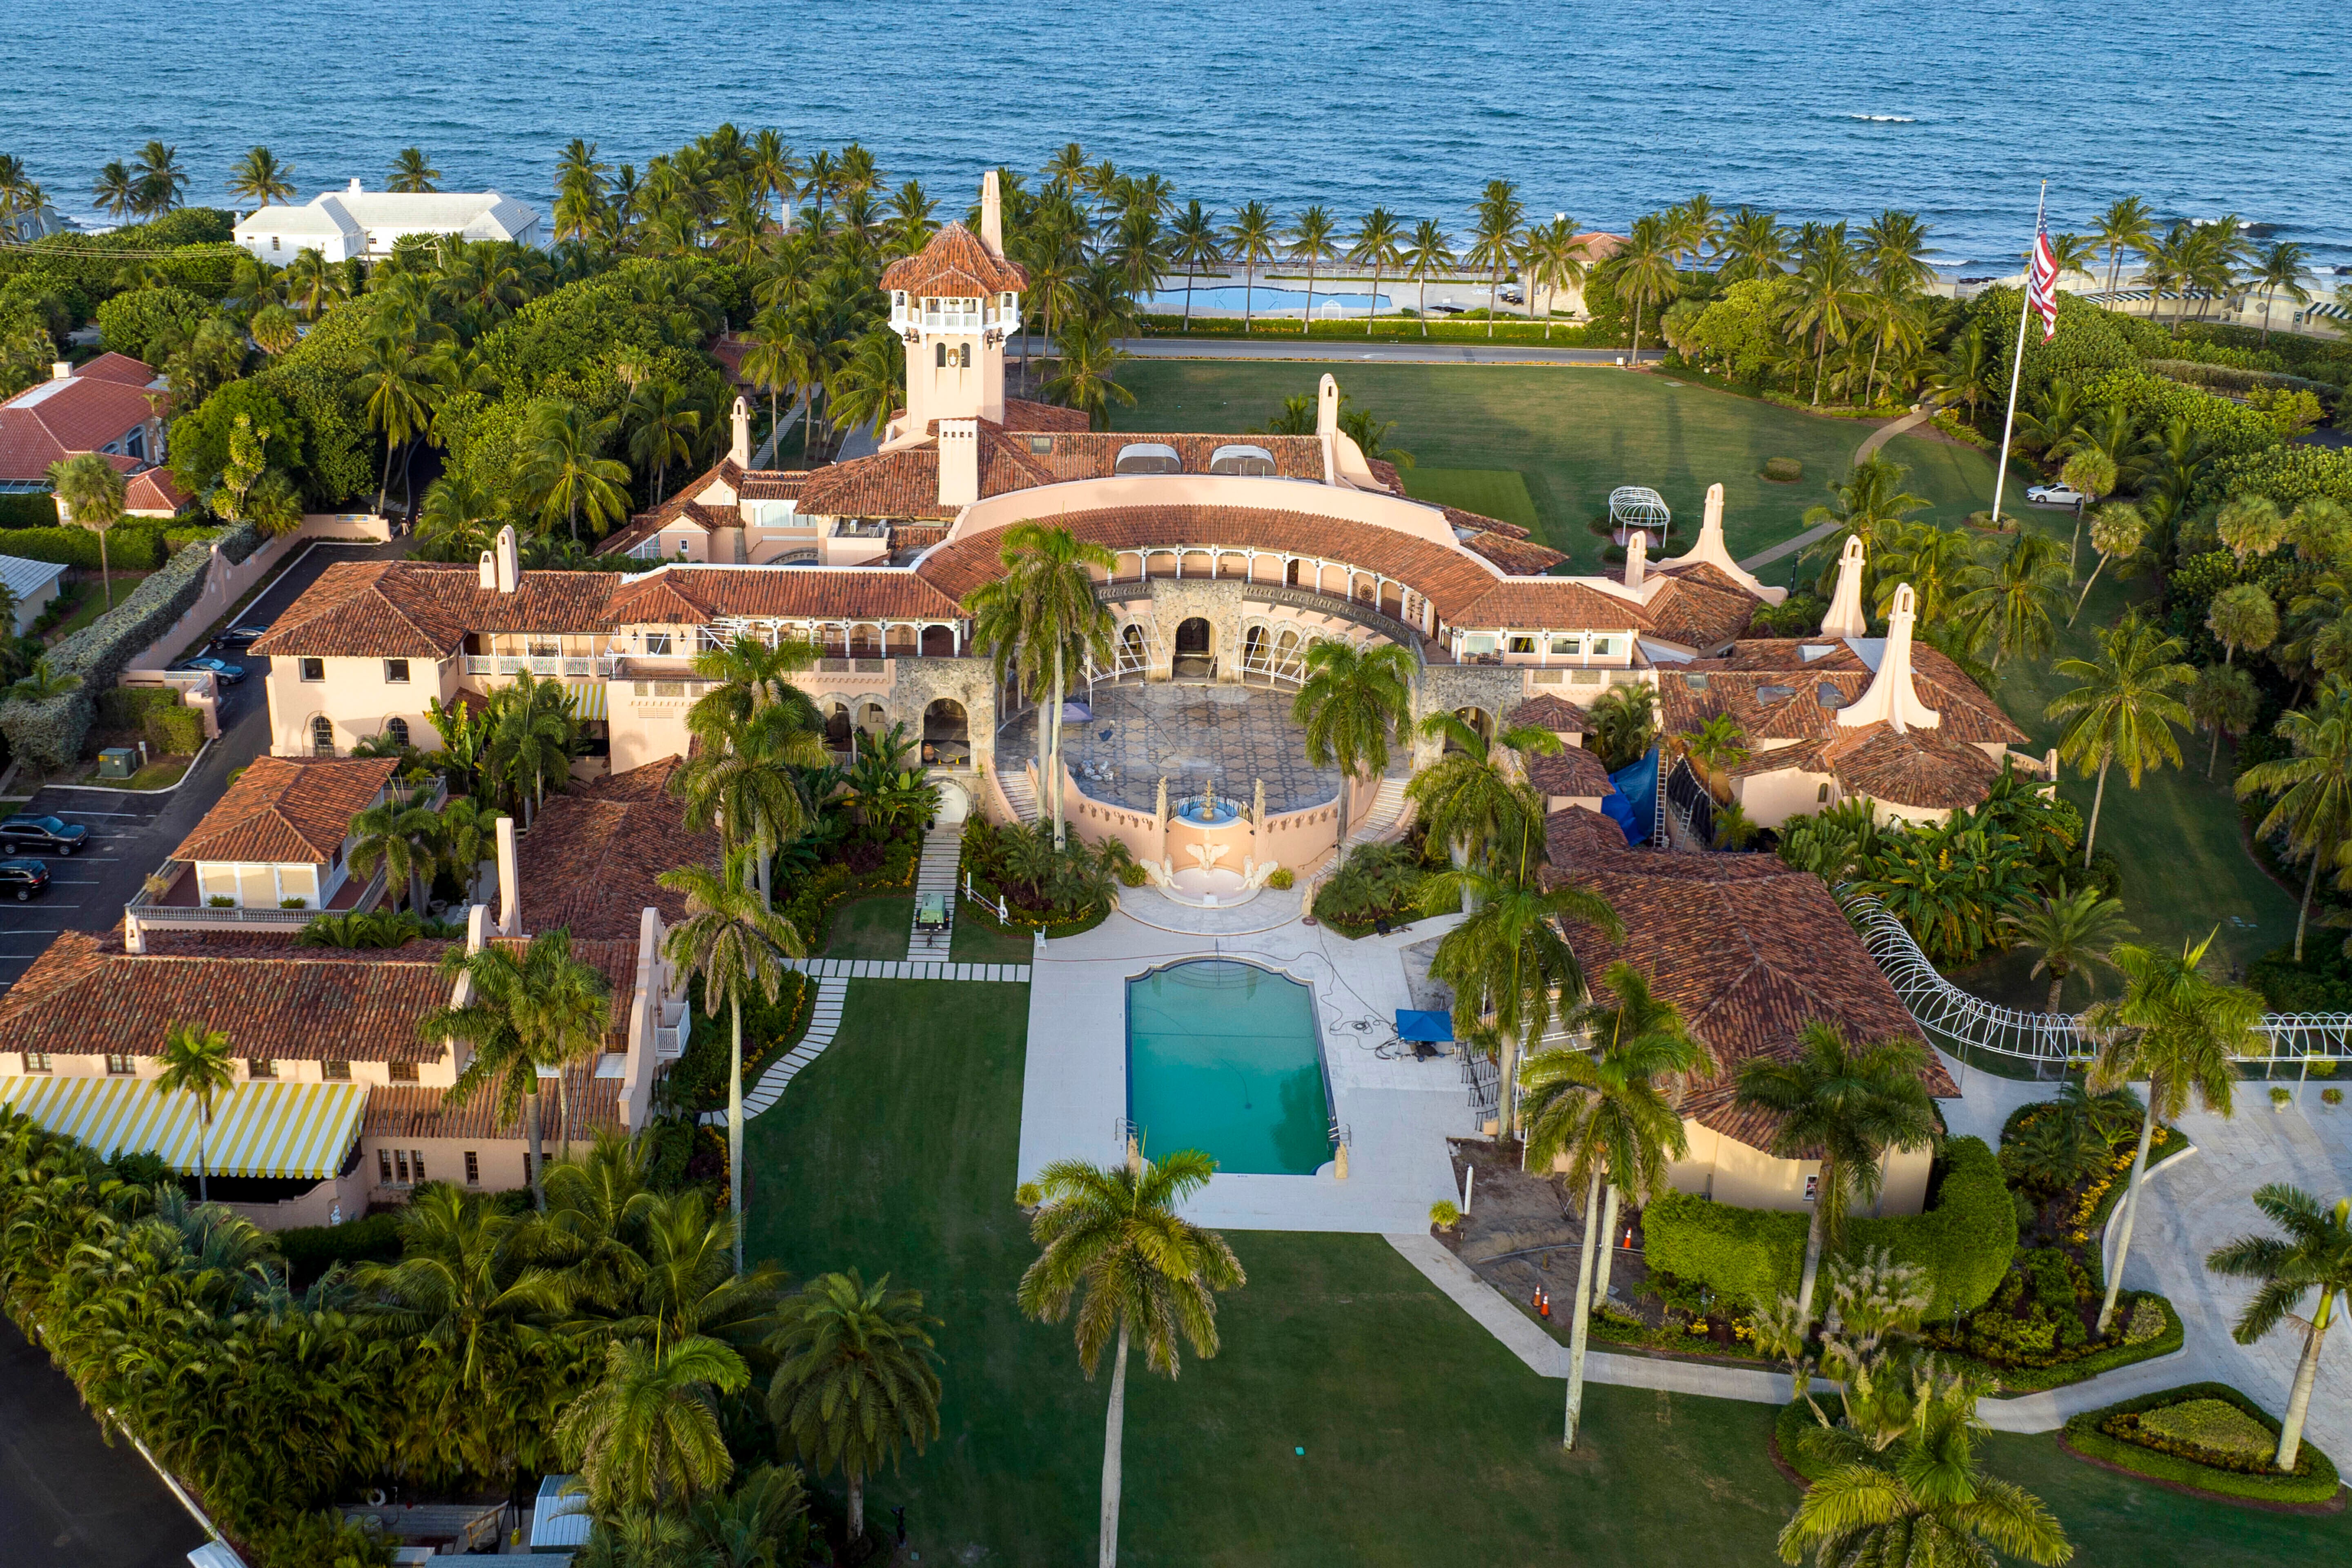 Mar-a-Lago, Donald Trump’s home and private members club, in Palm Beach